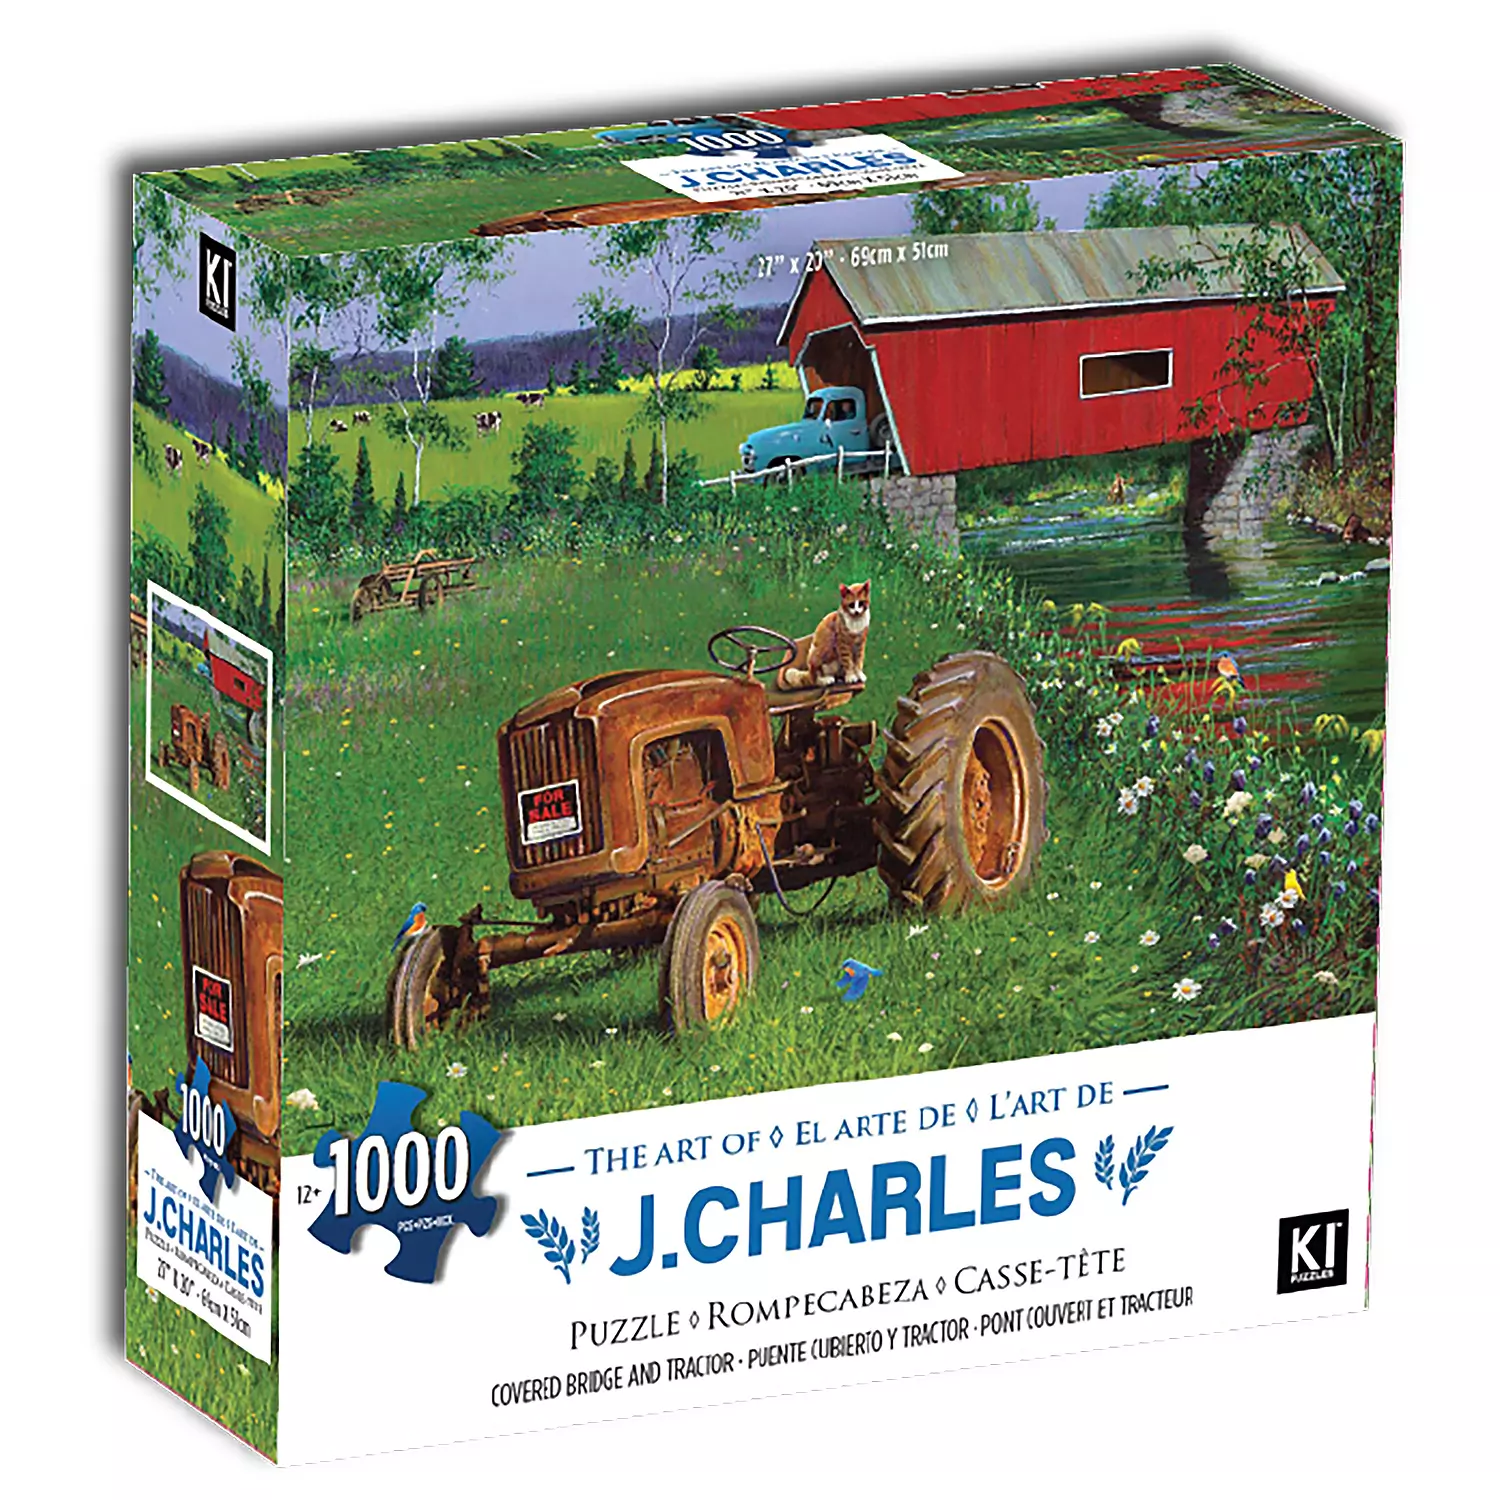 KI - Puzzle, J. Charles, Covered bridge and tractor, 1000 pcs